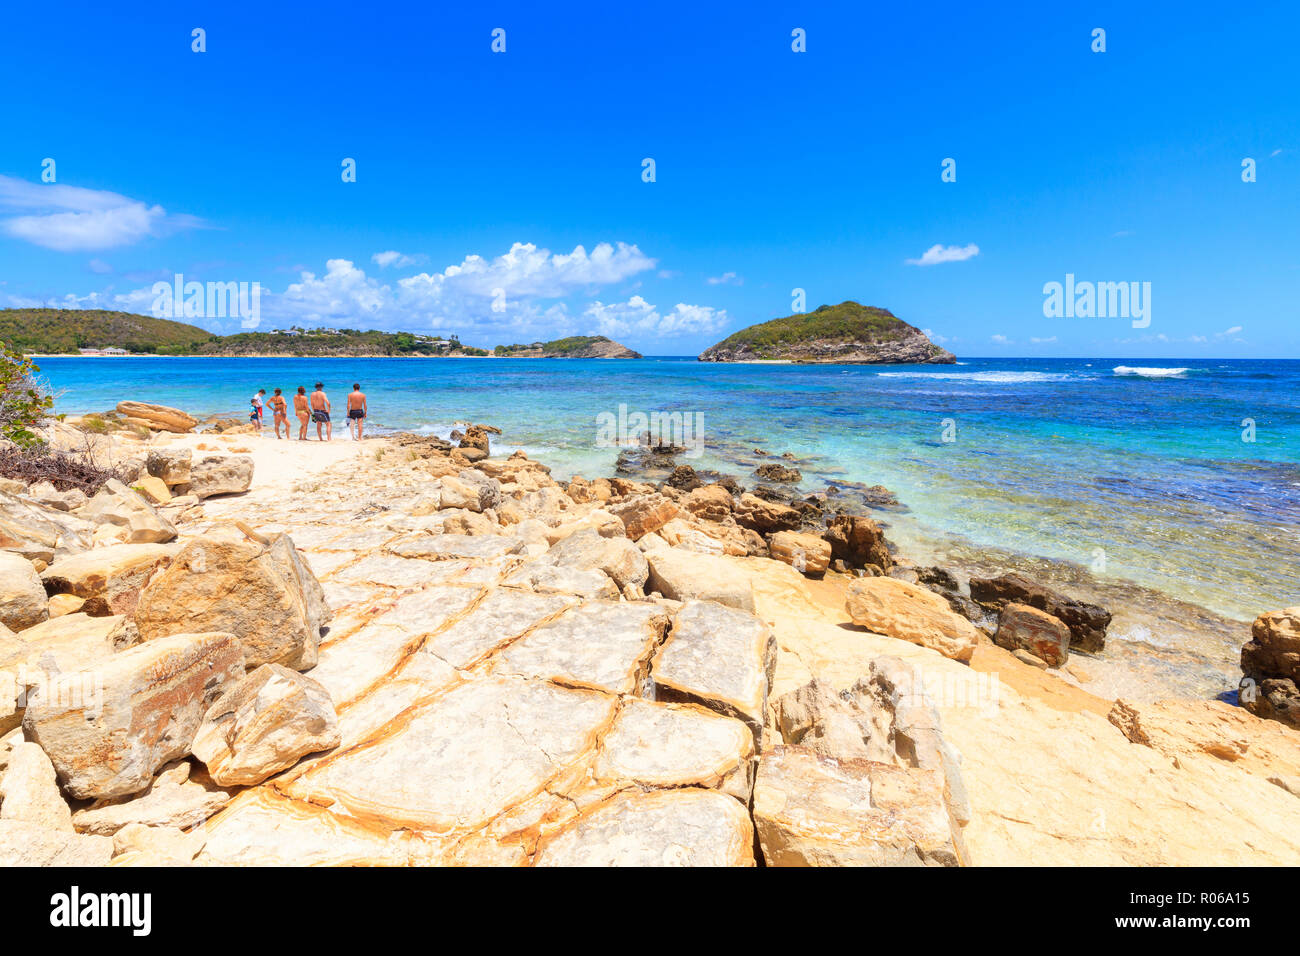 People on rocks overlooking the crystal sea, Half Moon Bay, Antigua and Barbuda, Leeward Islands, West Indies, Caribbean, Central America Stock Photo